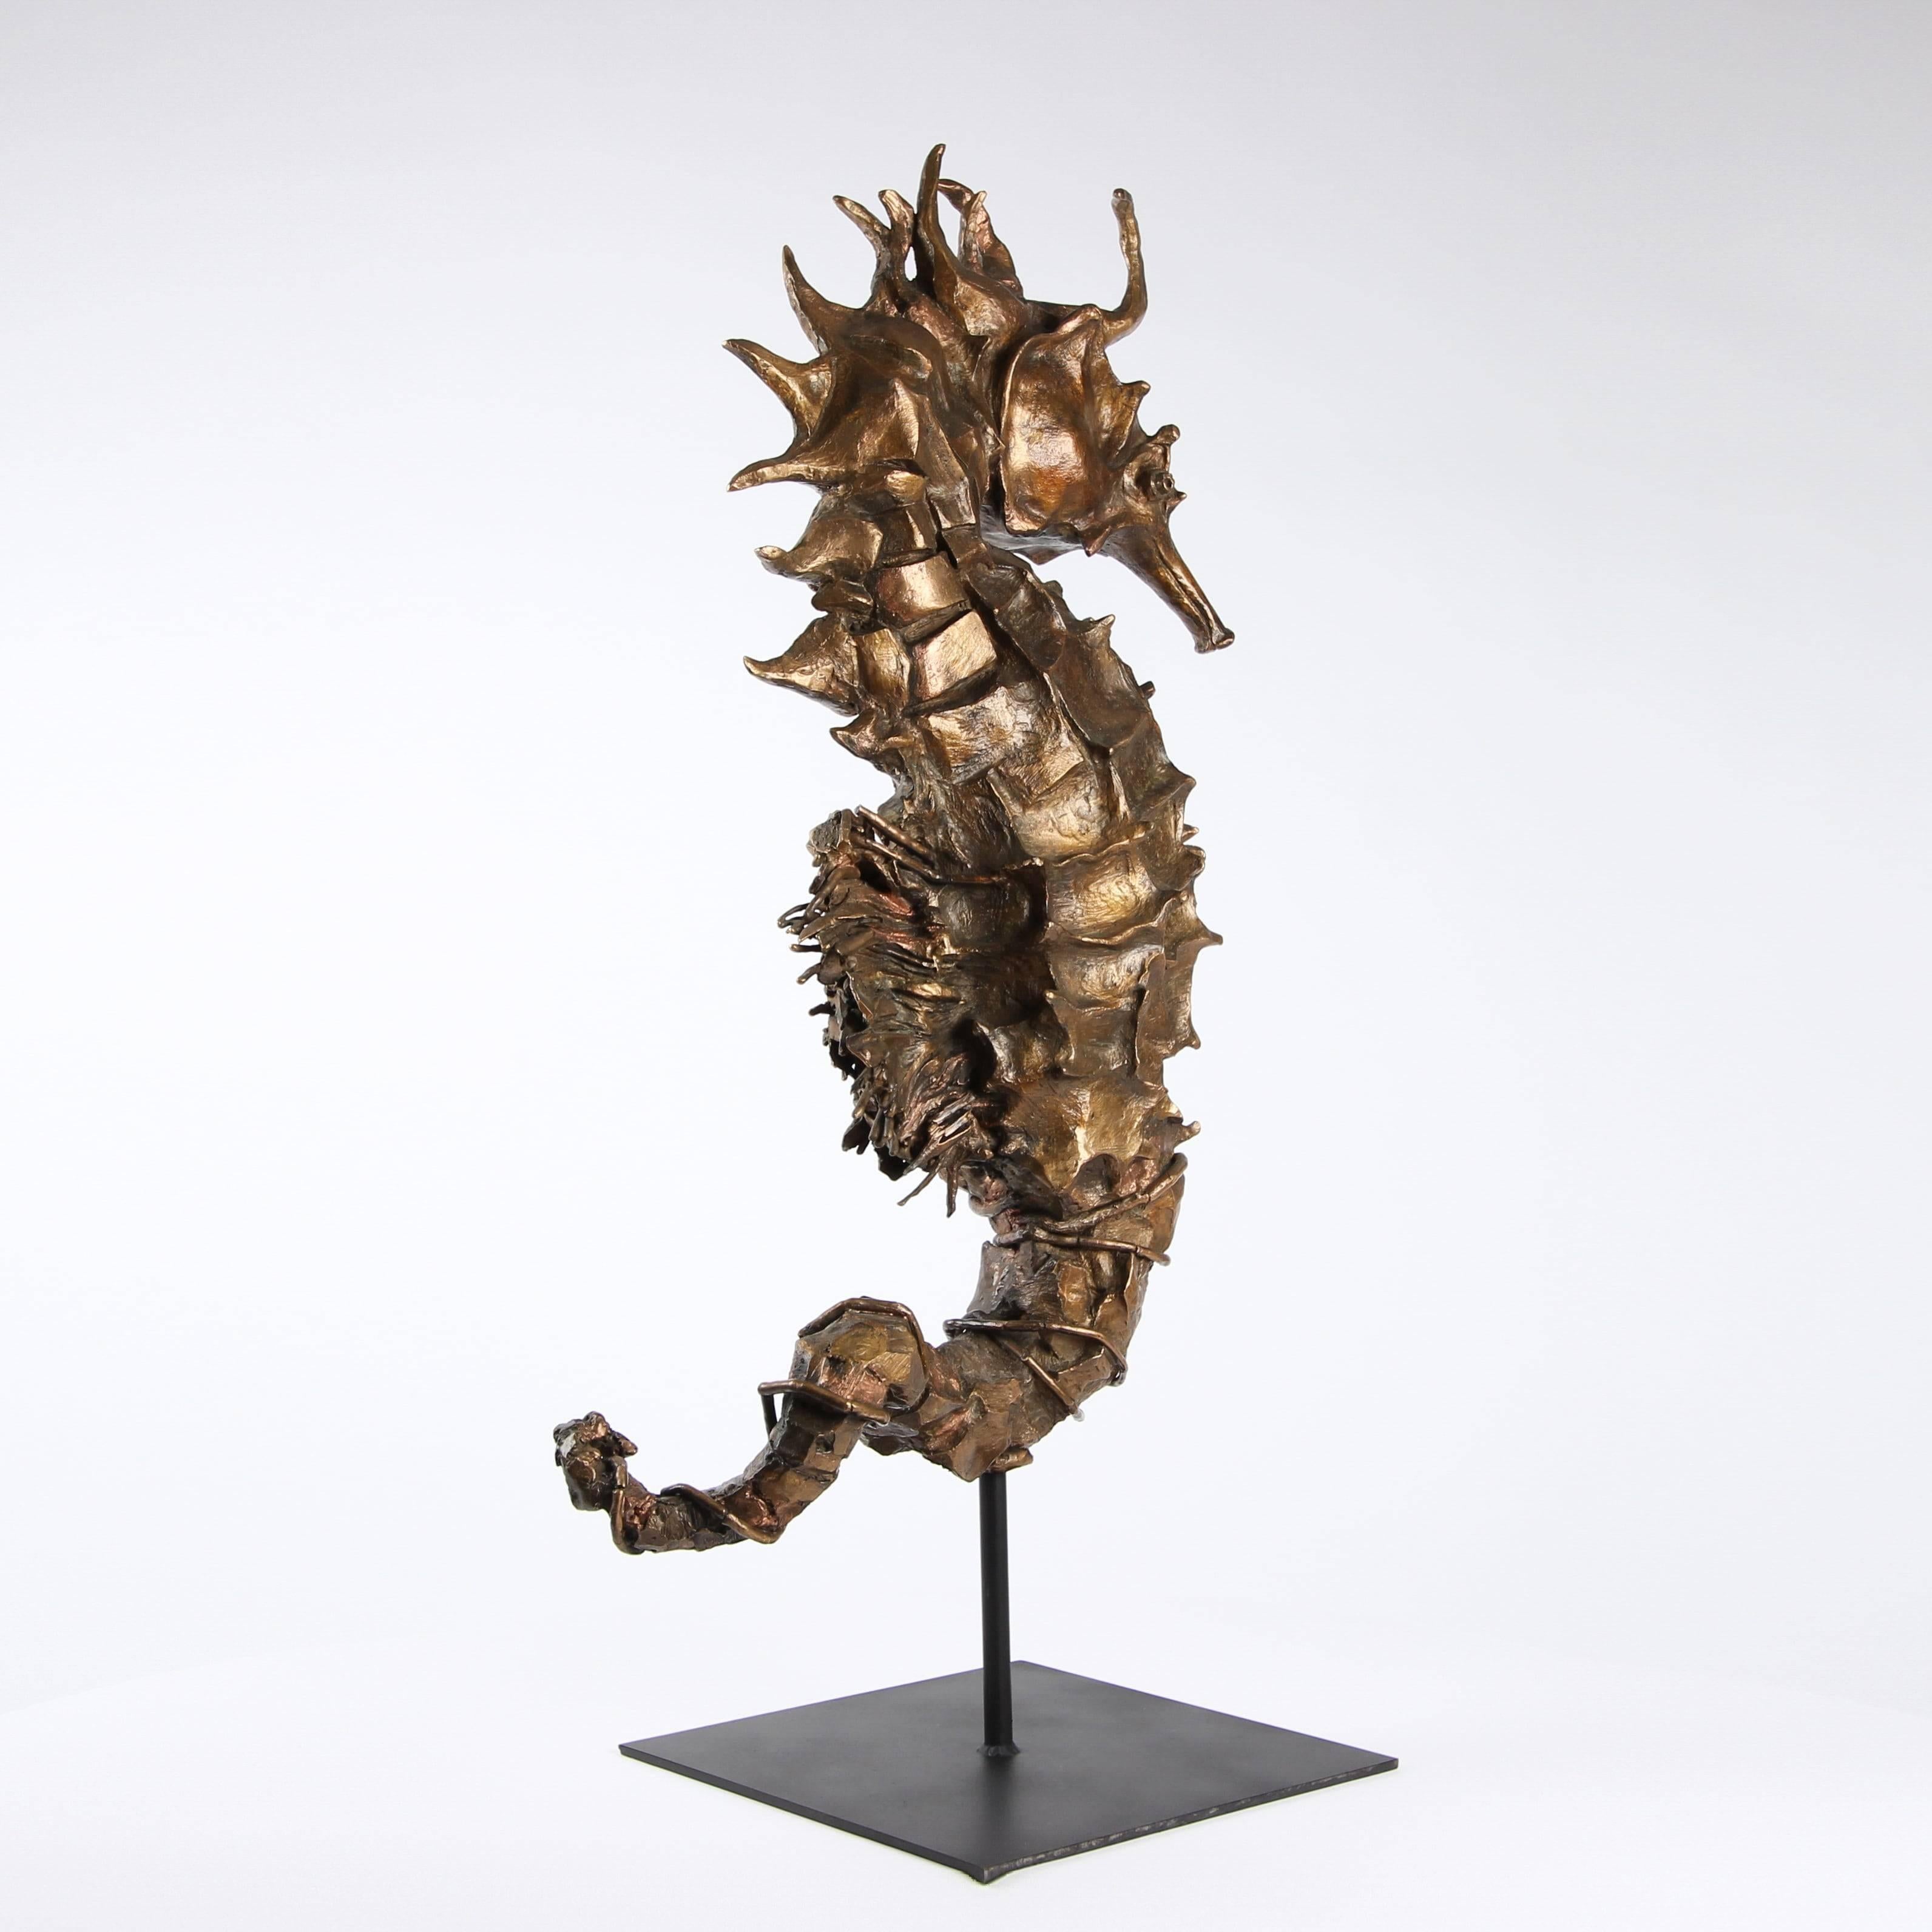 Seahorse Rex Gold by Chésade - Sealife bronze sculpture For Sale 4